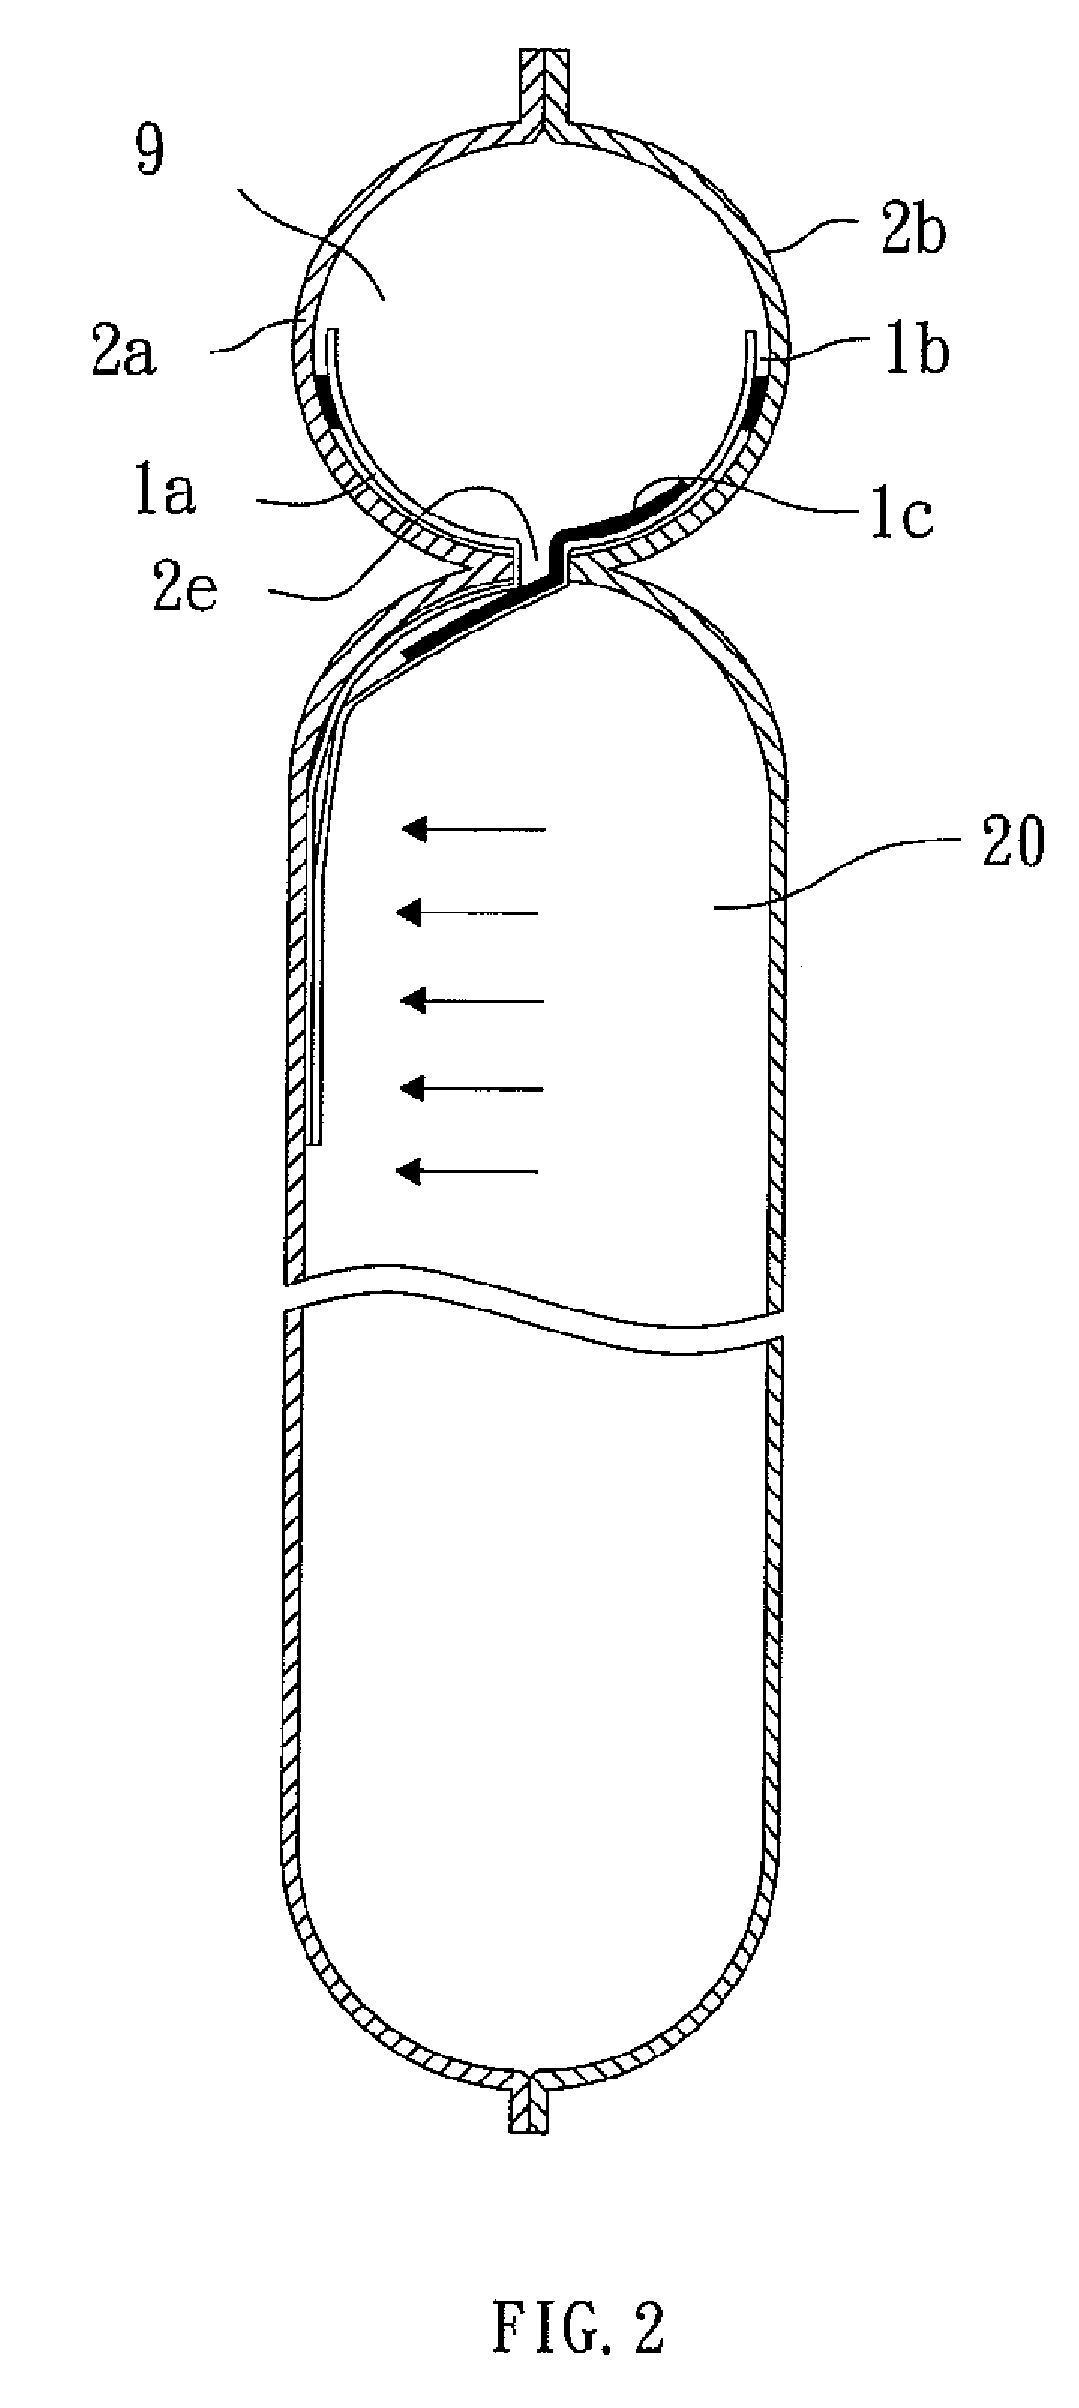 Hammock-type vibration-absorbing air sheath